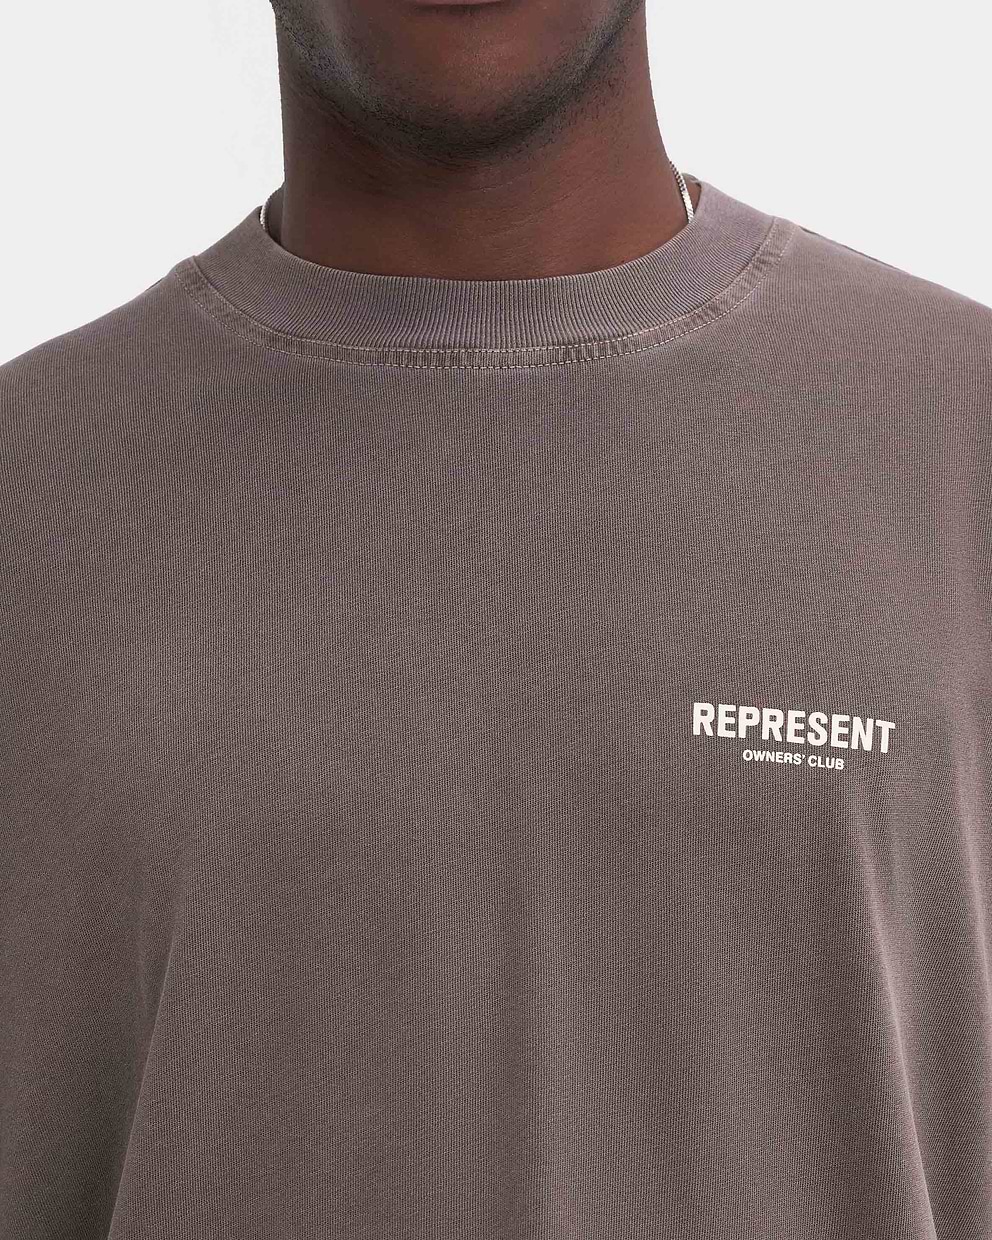 Represent Owners Club T-Shirt - Fog